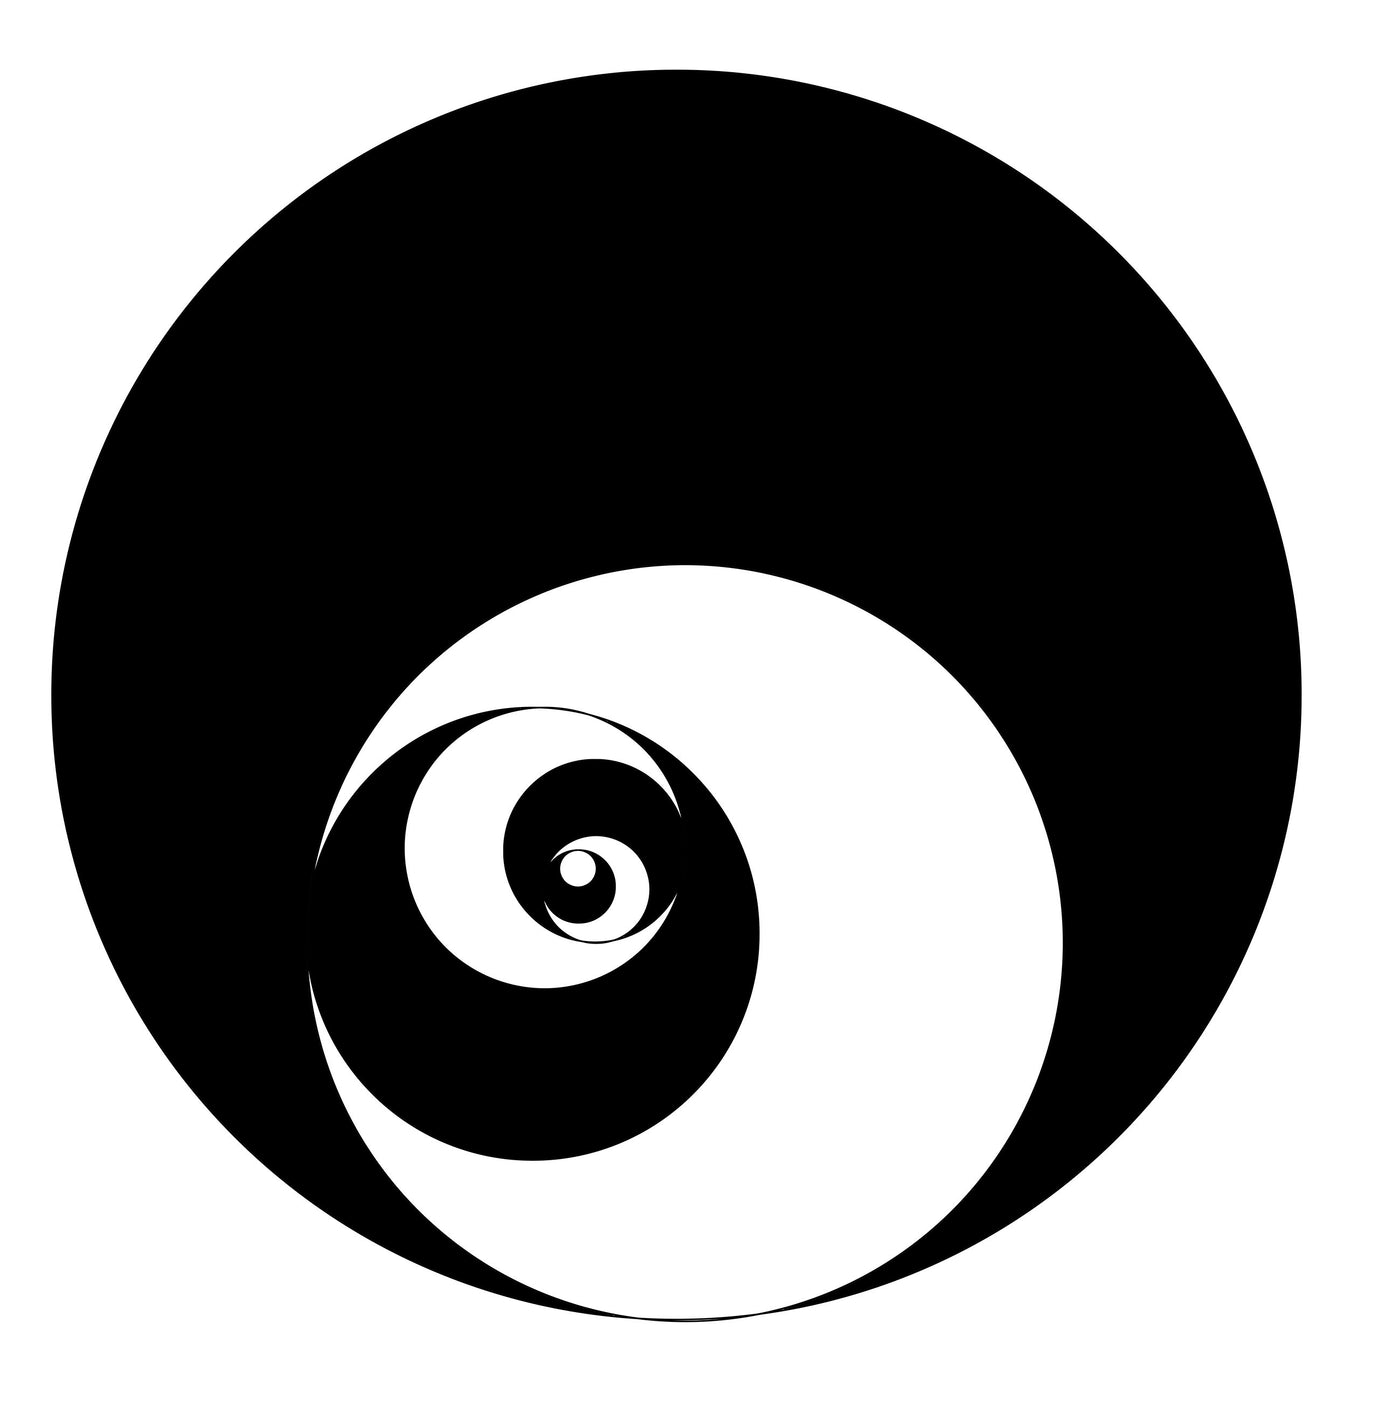 Fibonacci's Eye - Bells Fine Art